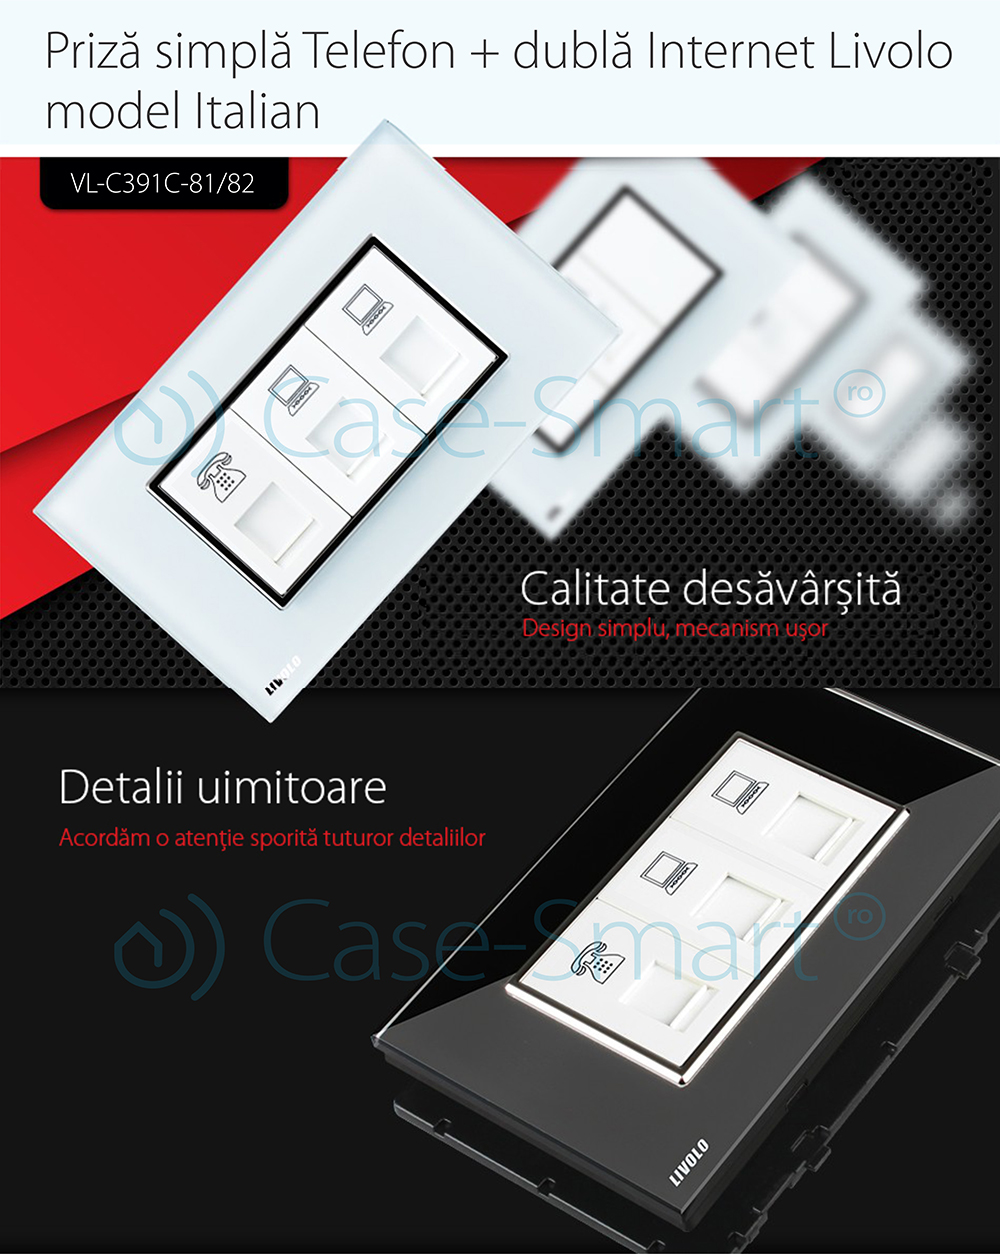 Priza telefon+dubla internet Livolo cu rama din sticla – standard italian